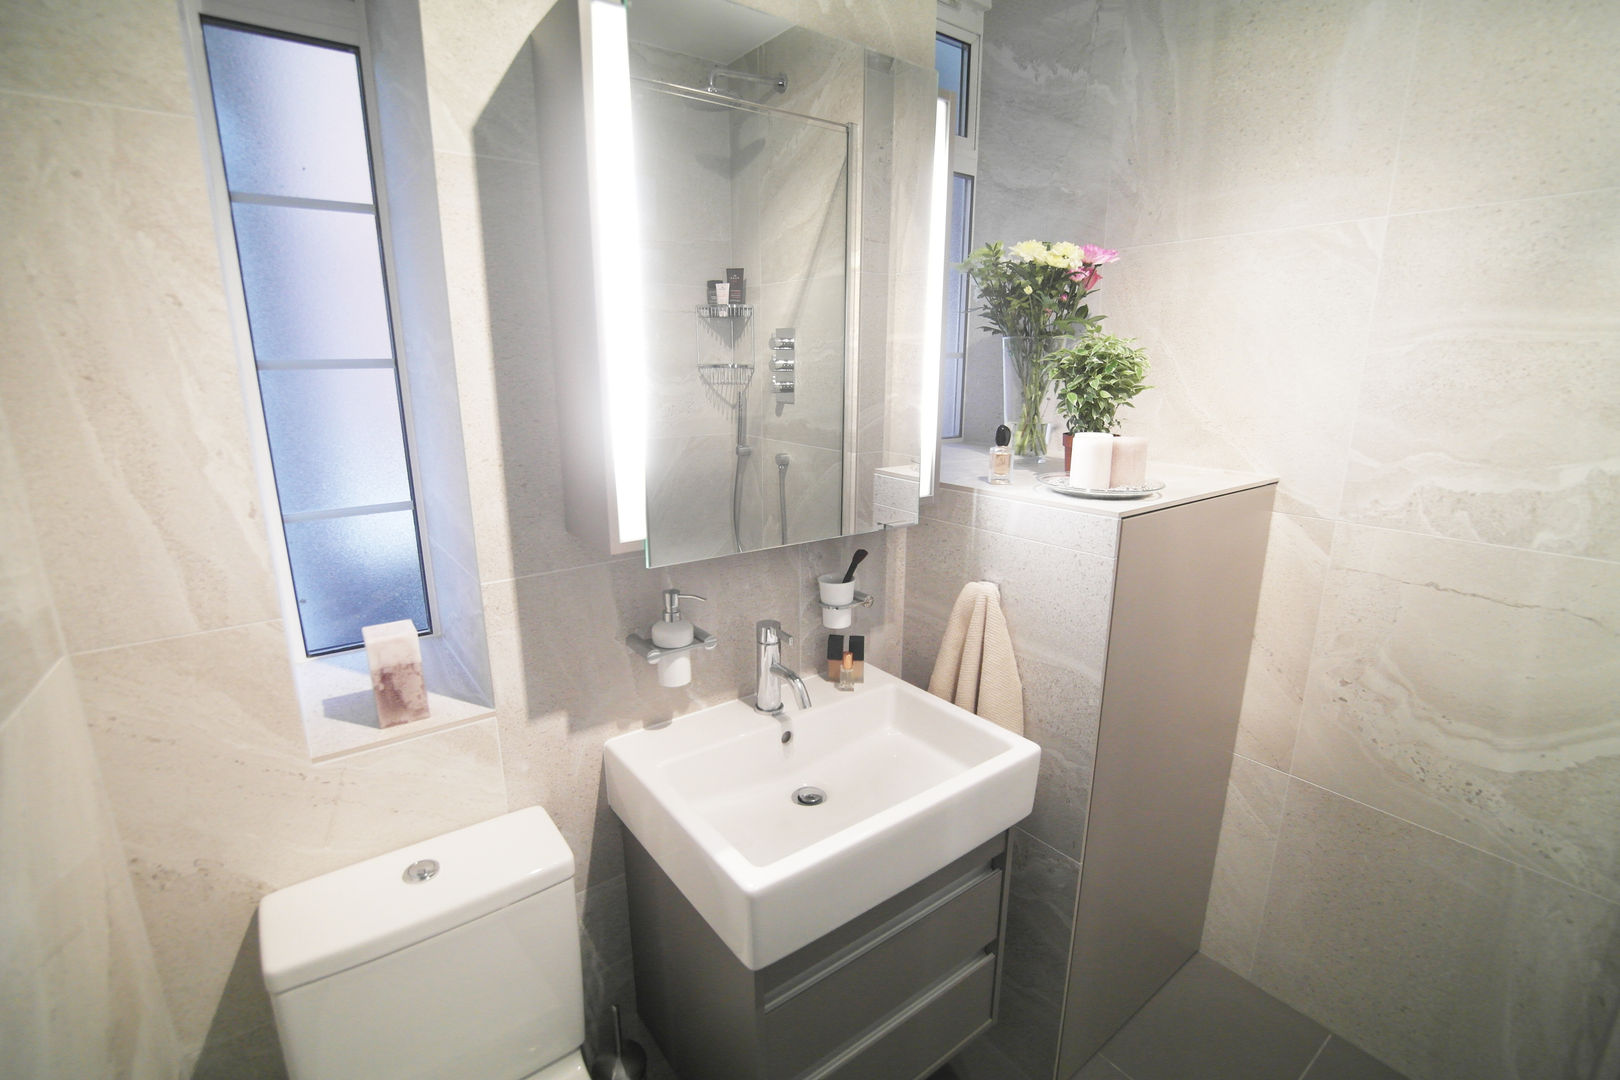 St John's Wood Patience Designs Studio Ltd Bagno moderno bathroom,interior,design